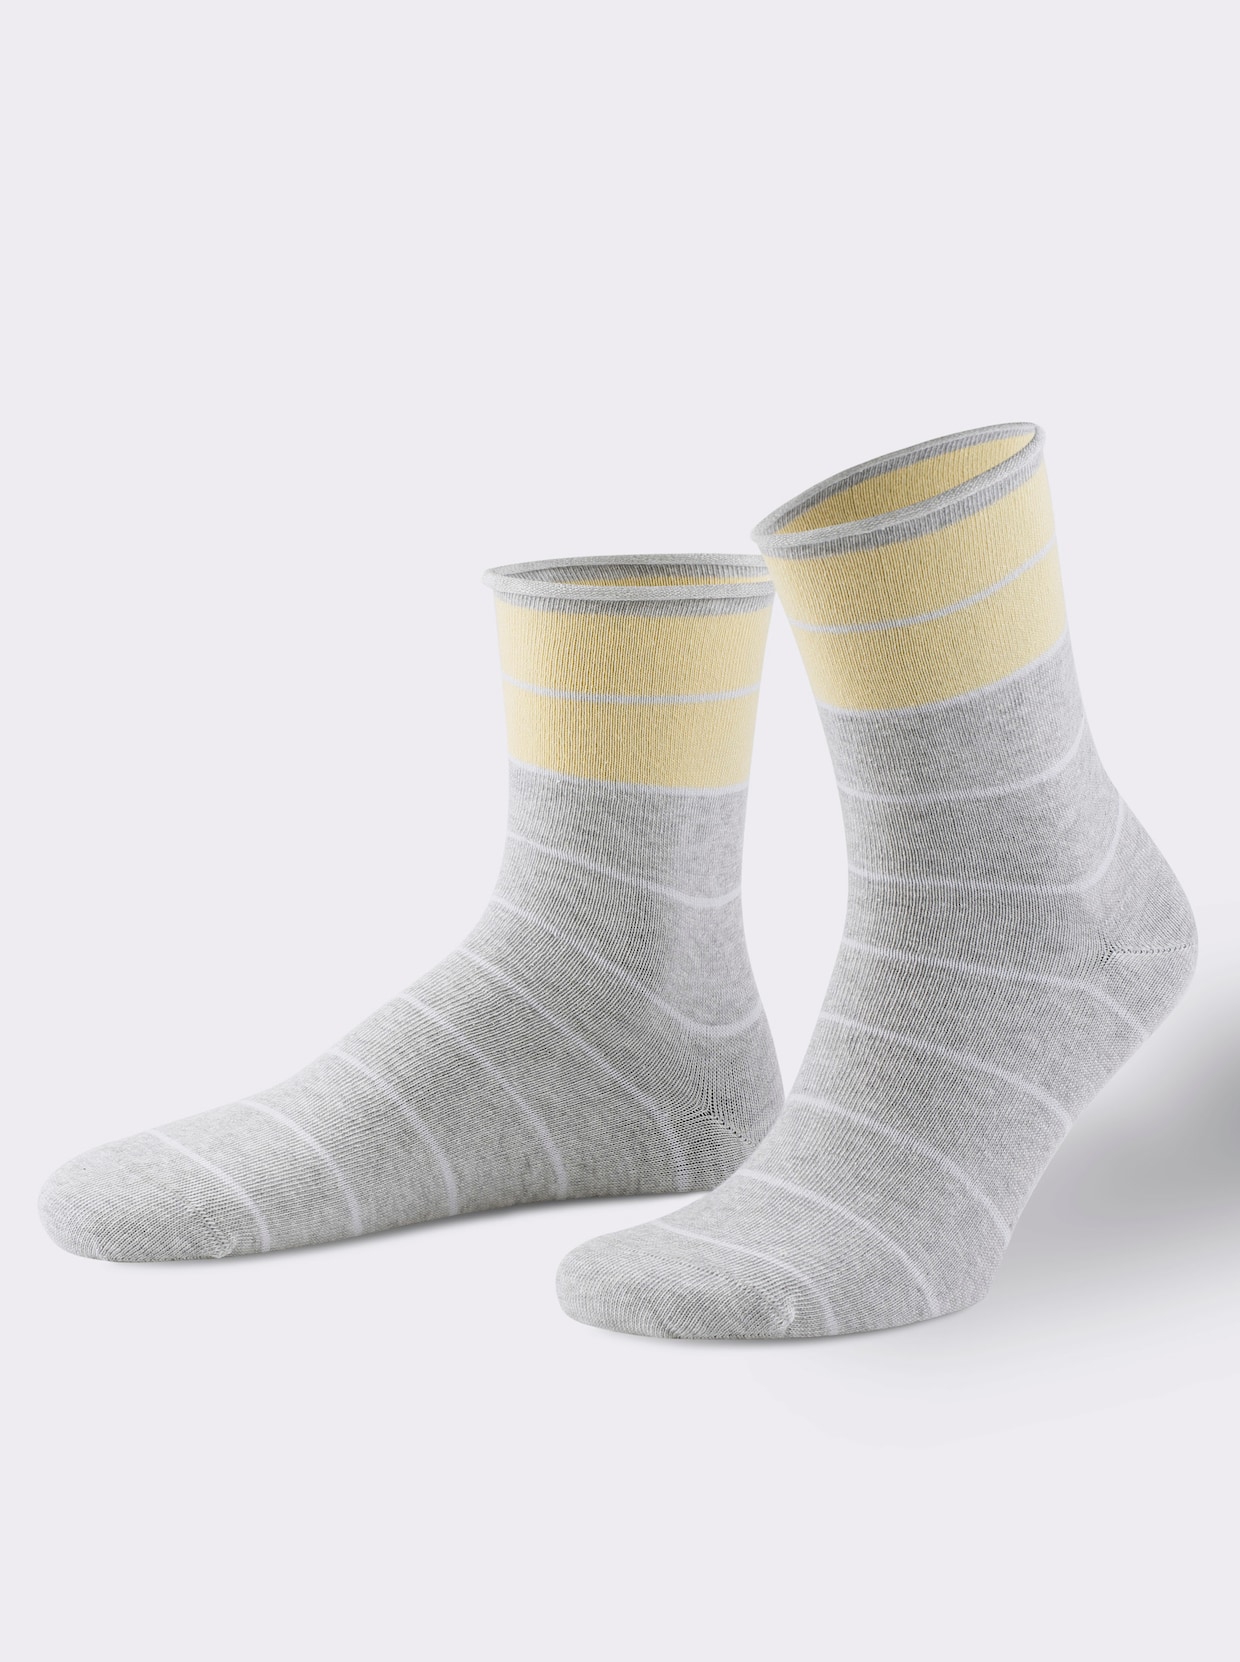 wäschepur Damen-Socken - farbig-sortiert